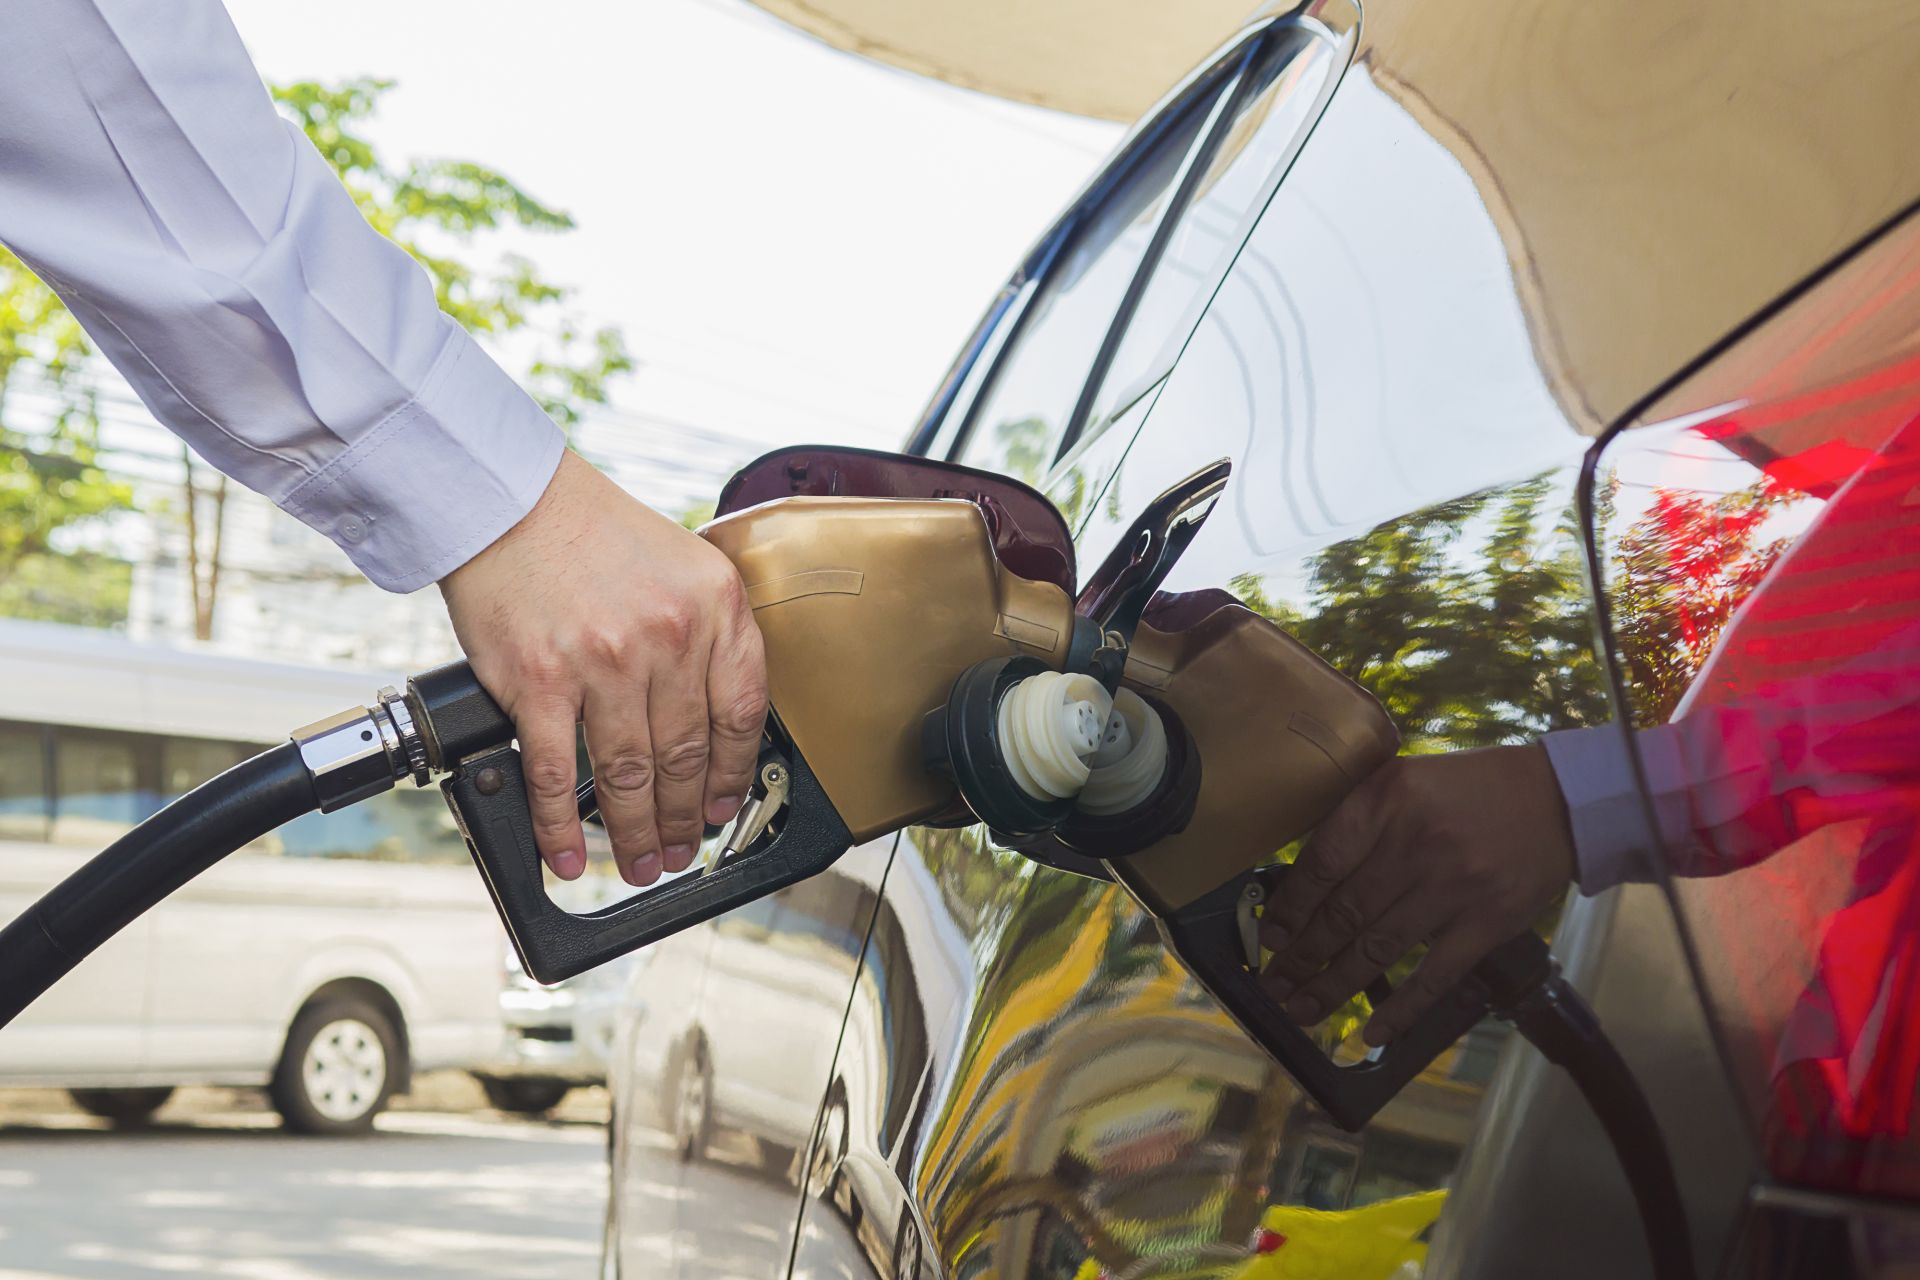 Diesel fuel and gasoline fuel prices